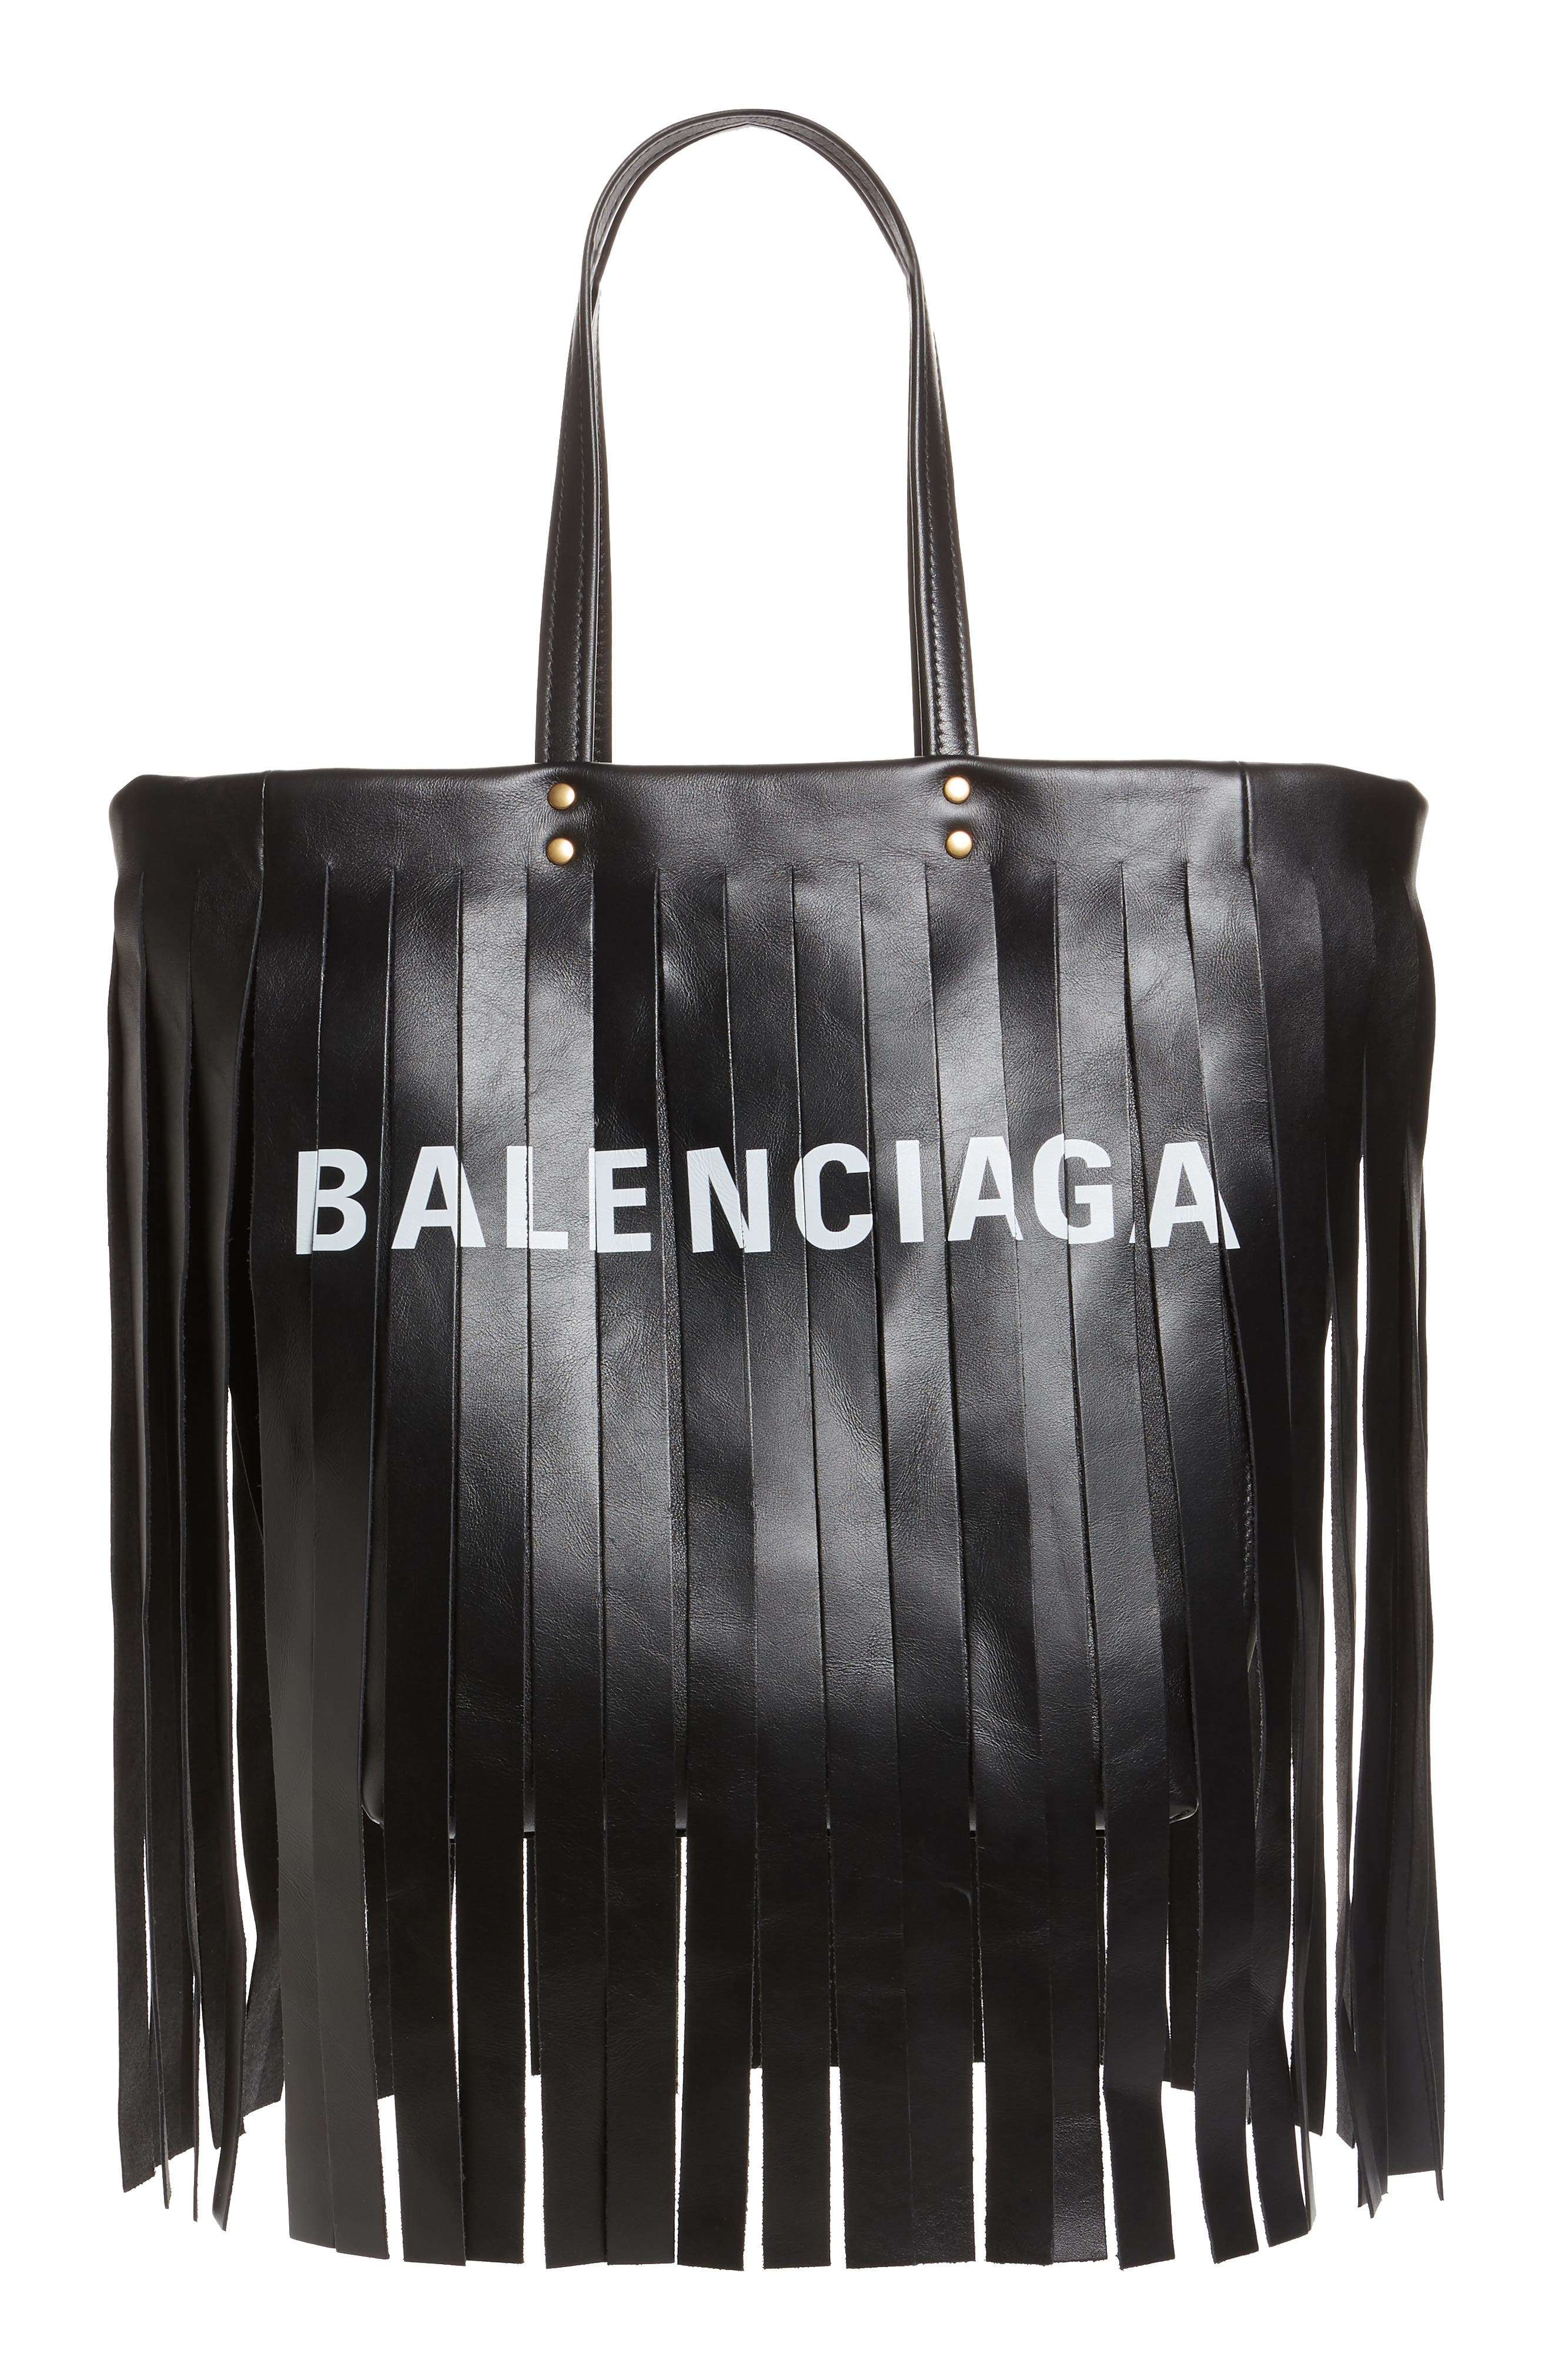 balenciaga bag with fringe